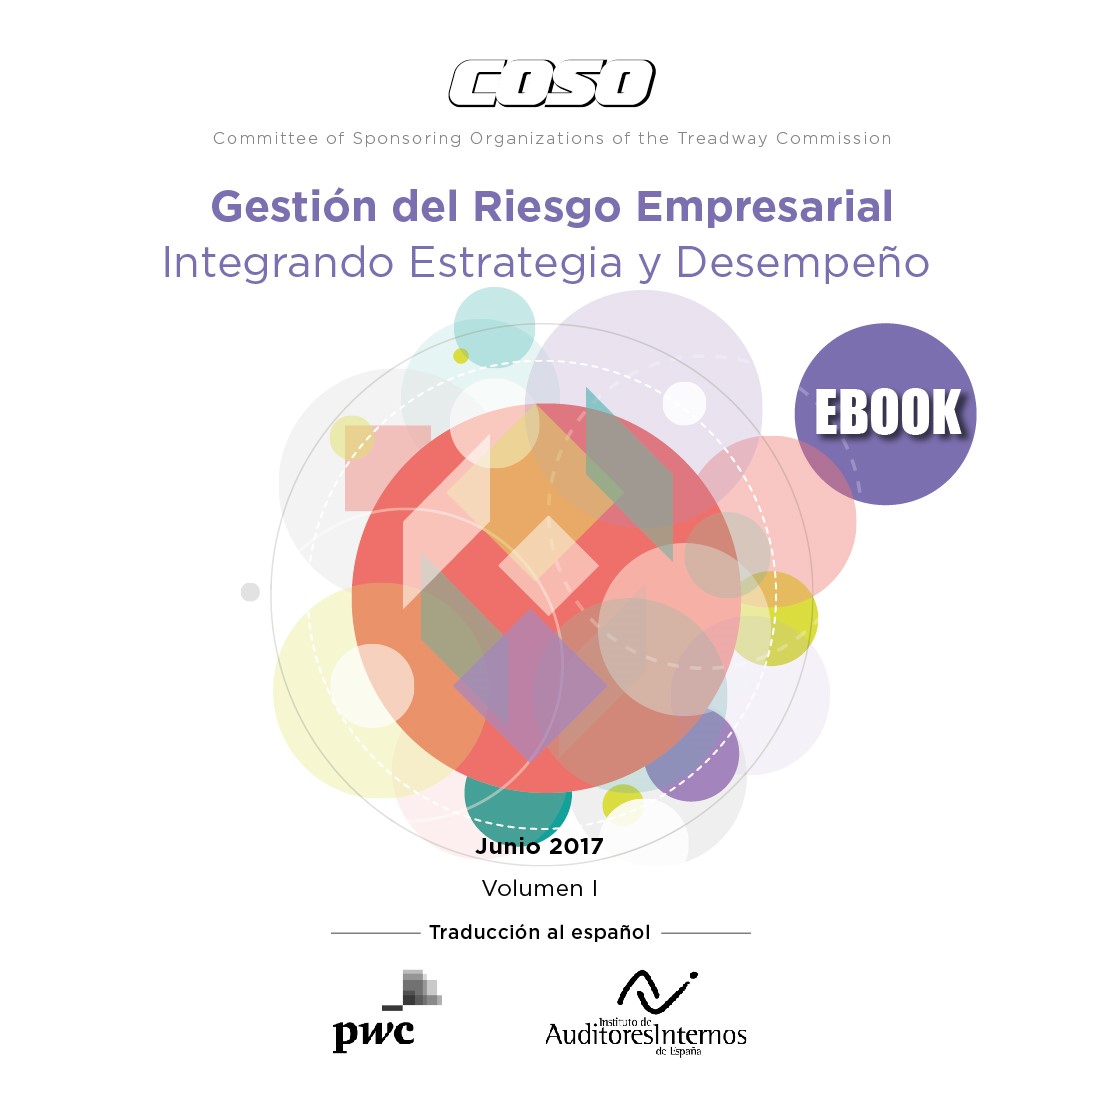 COSO ERM (Español - Ebook)